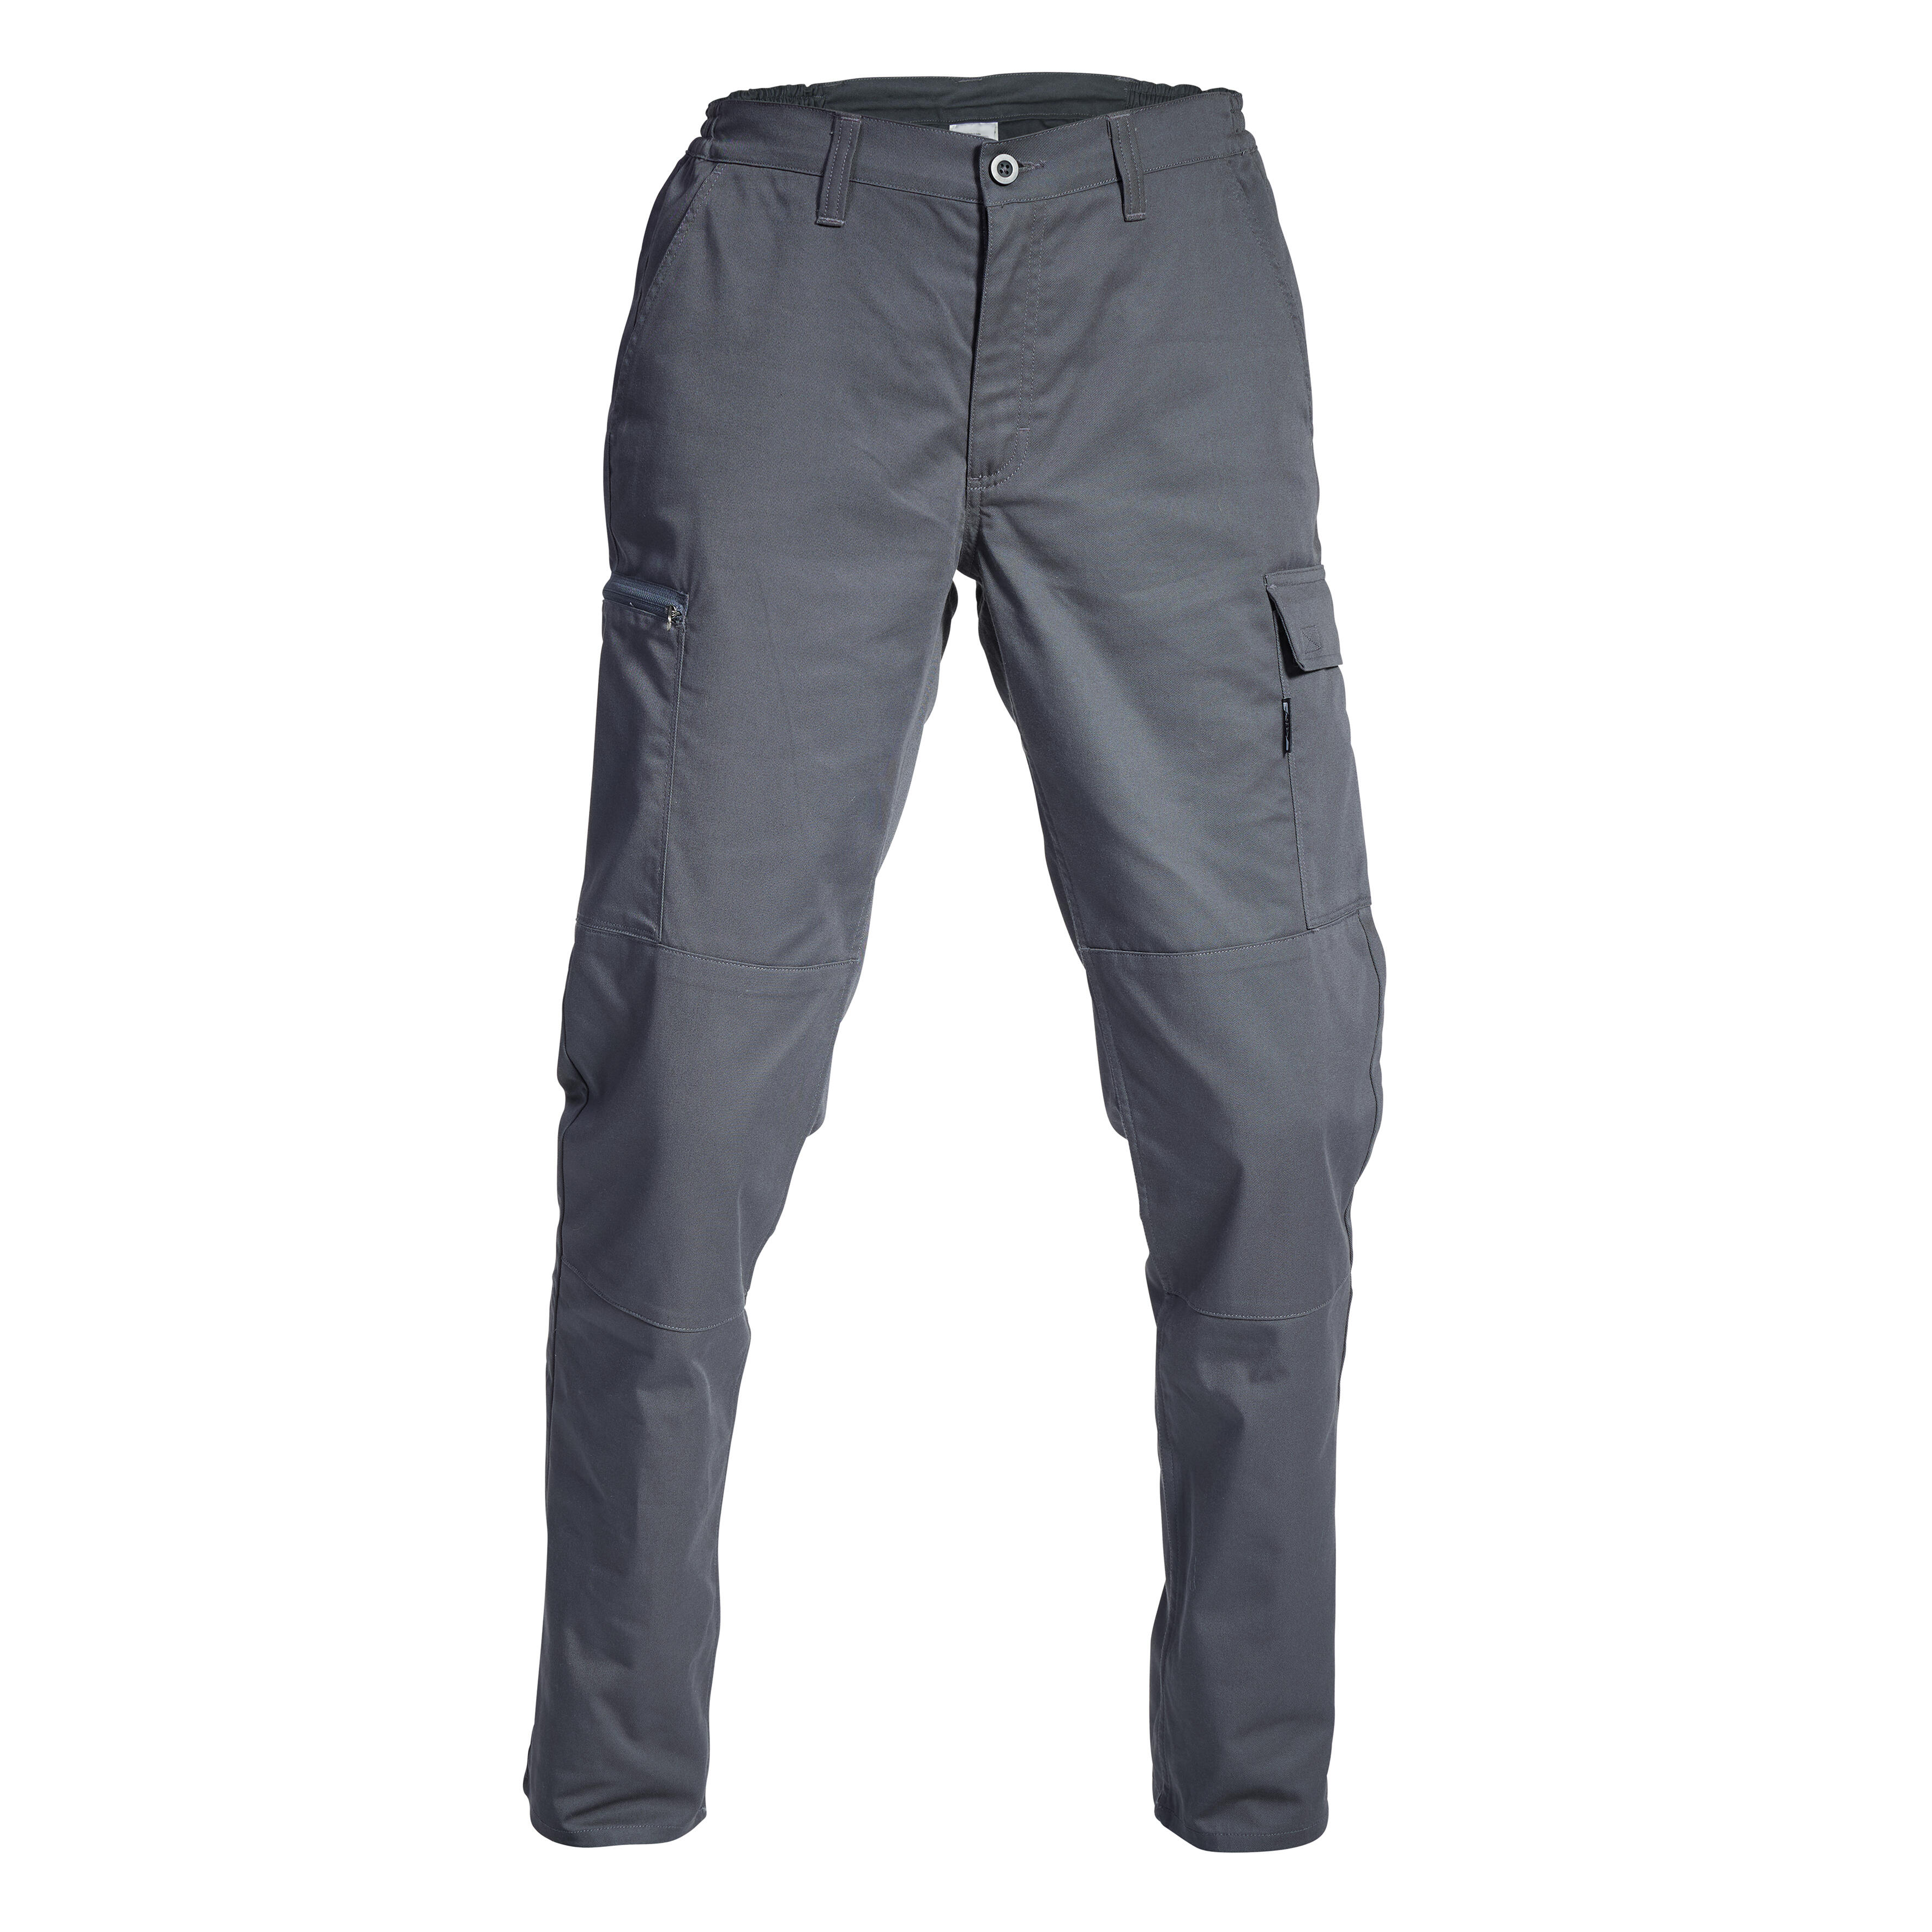 Buy Mens Solid Dark Grey Colour Cargo Pant 30 at Amazonin